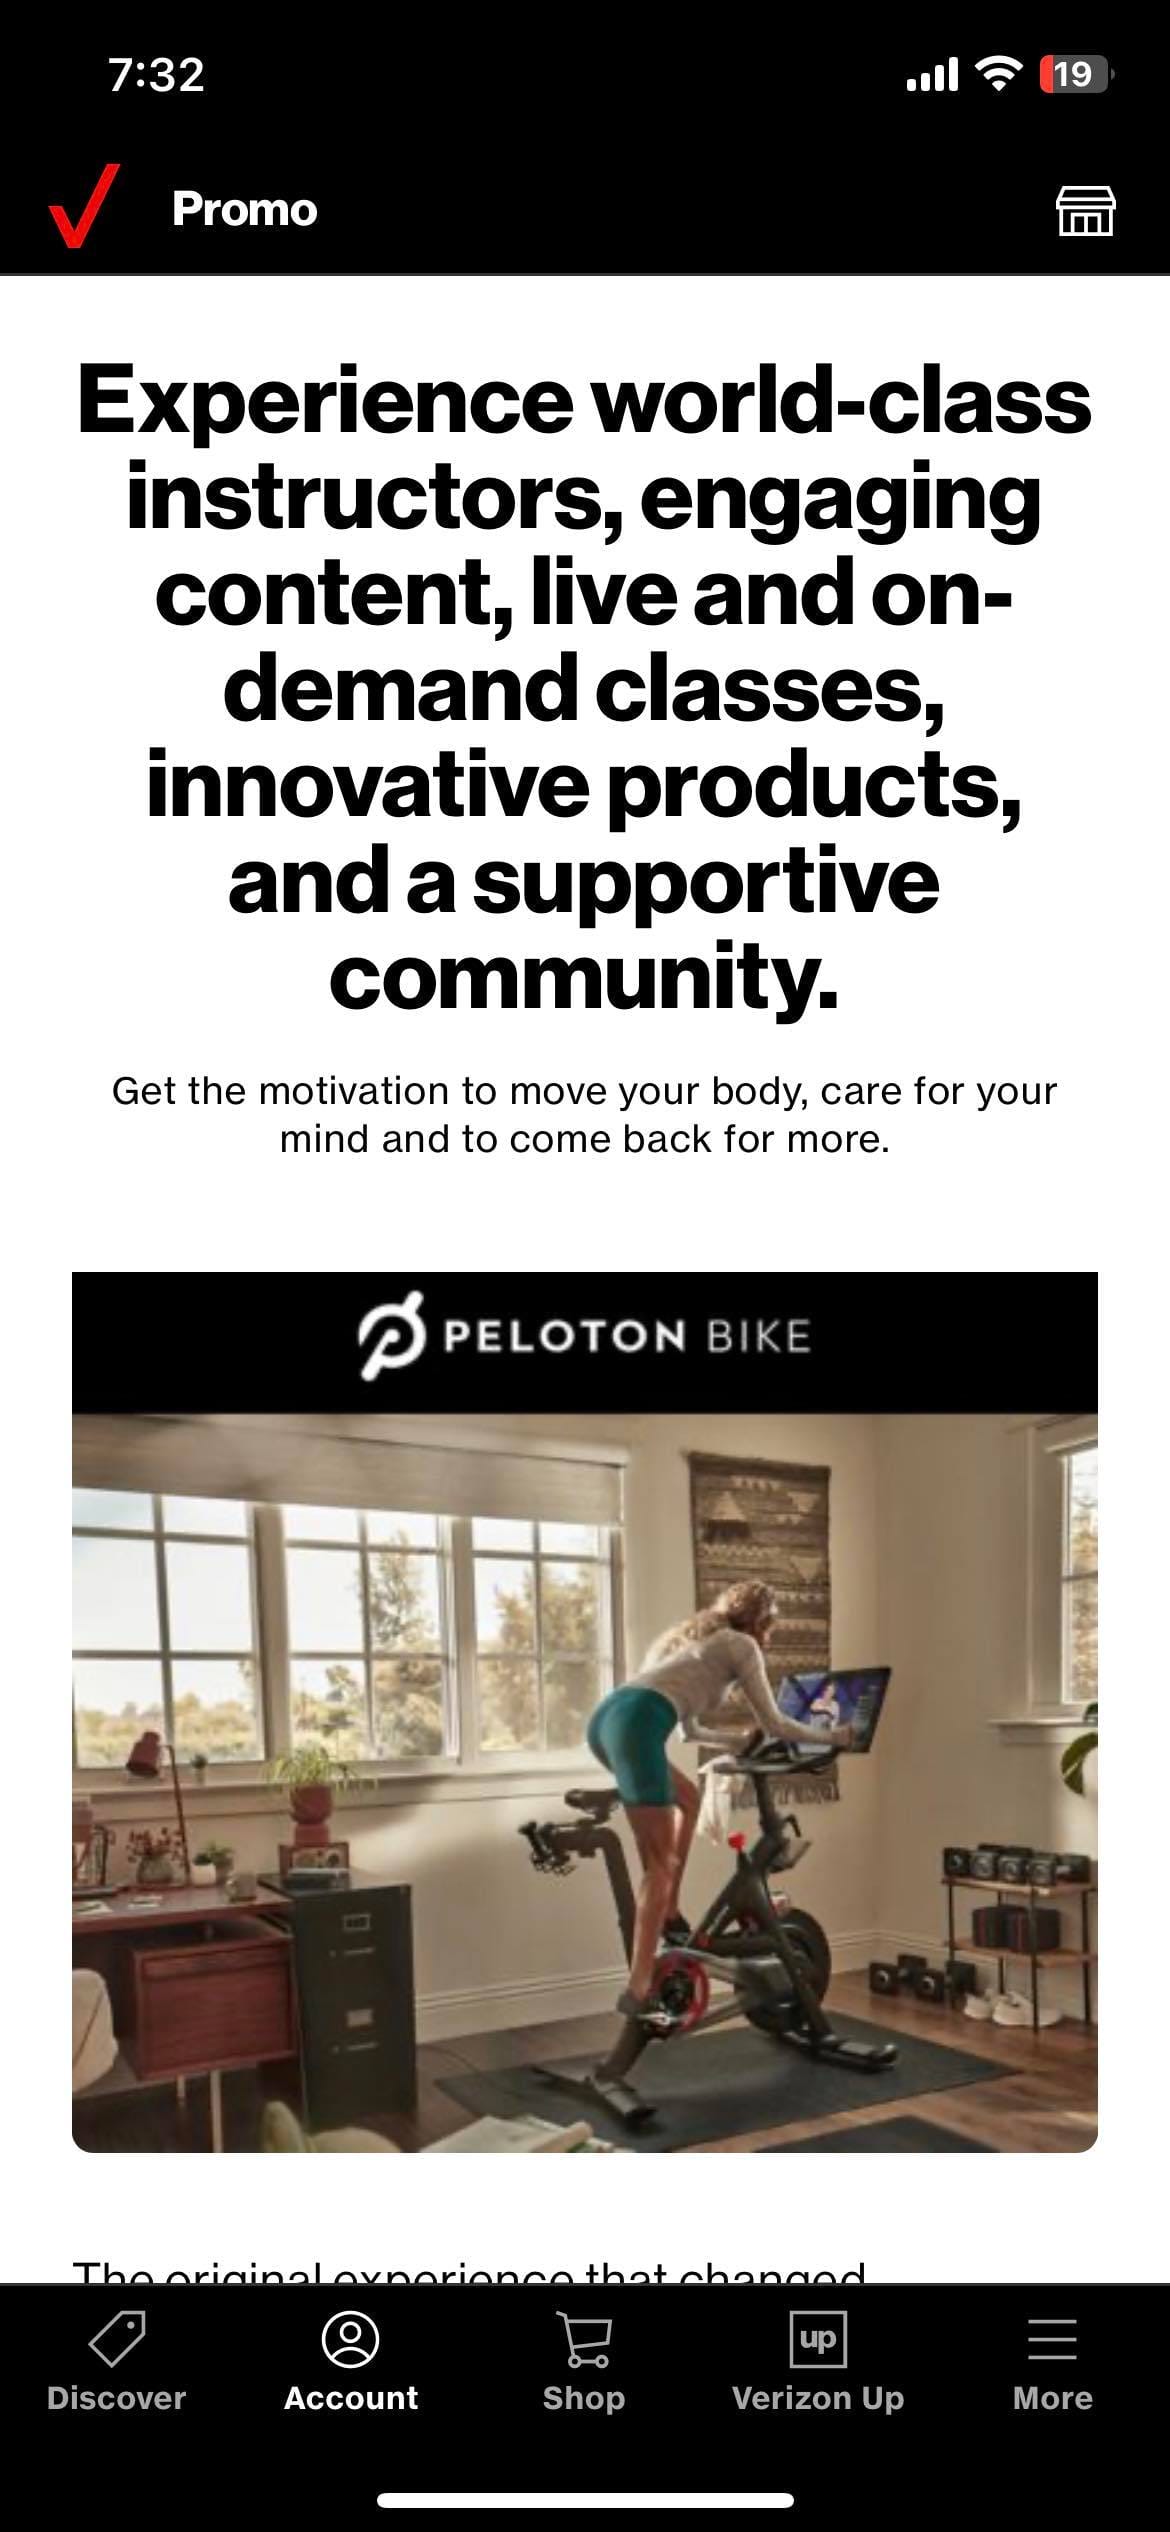 Verizon promos page displaying Peloton offer.